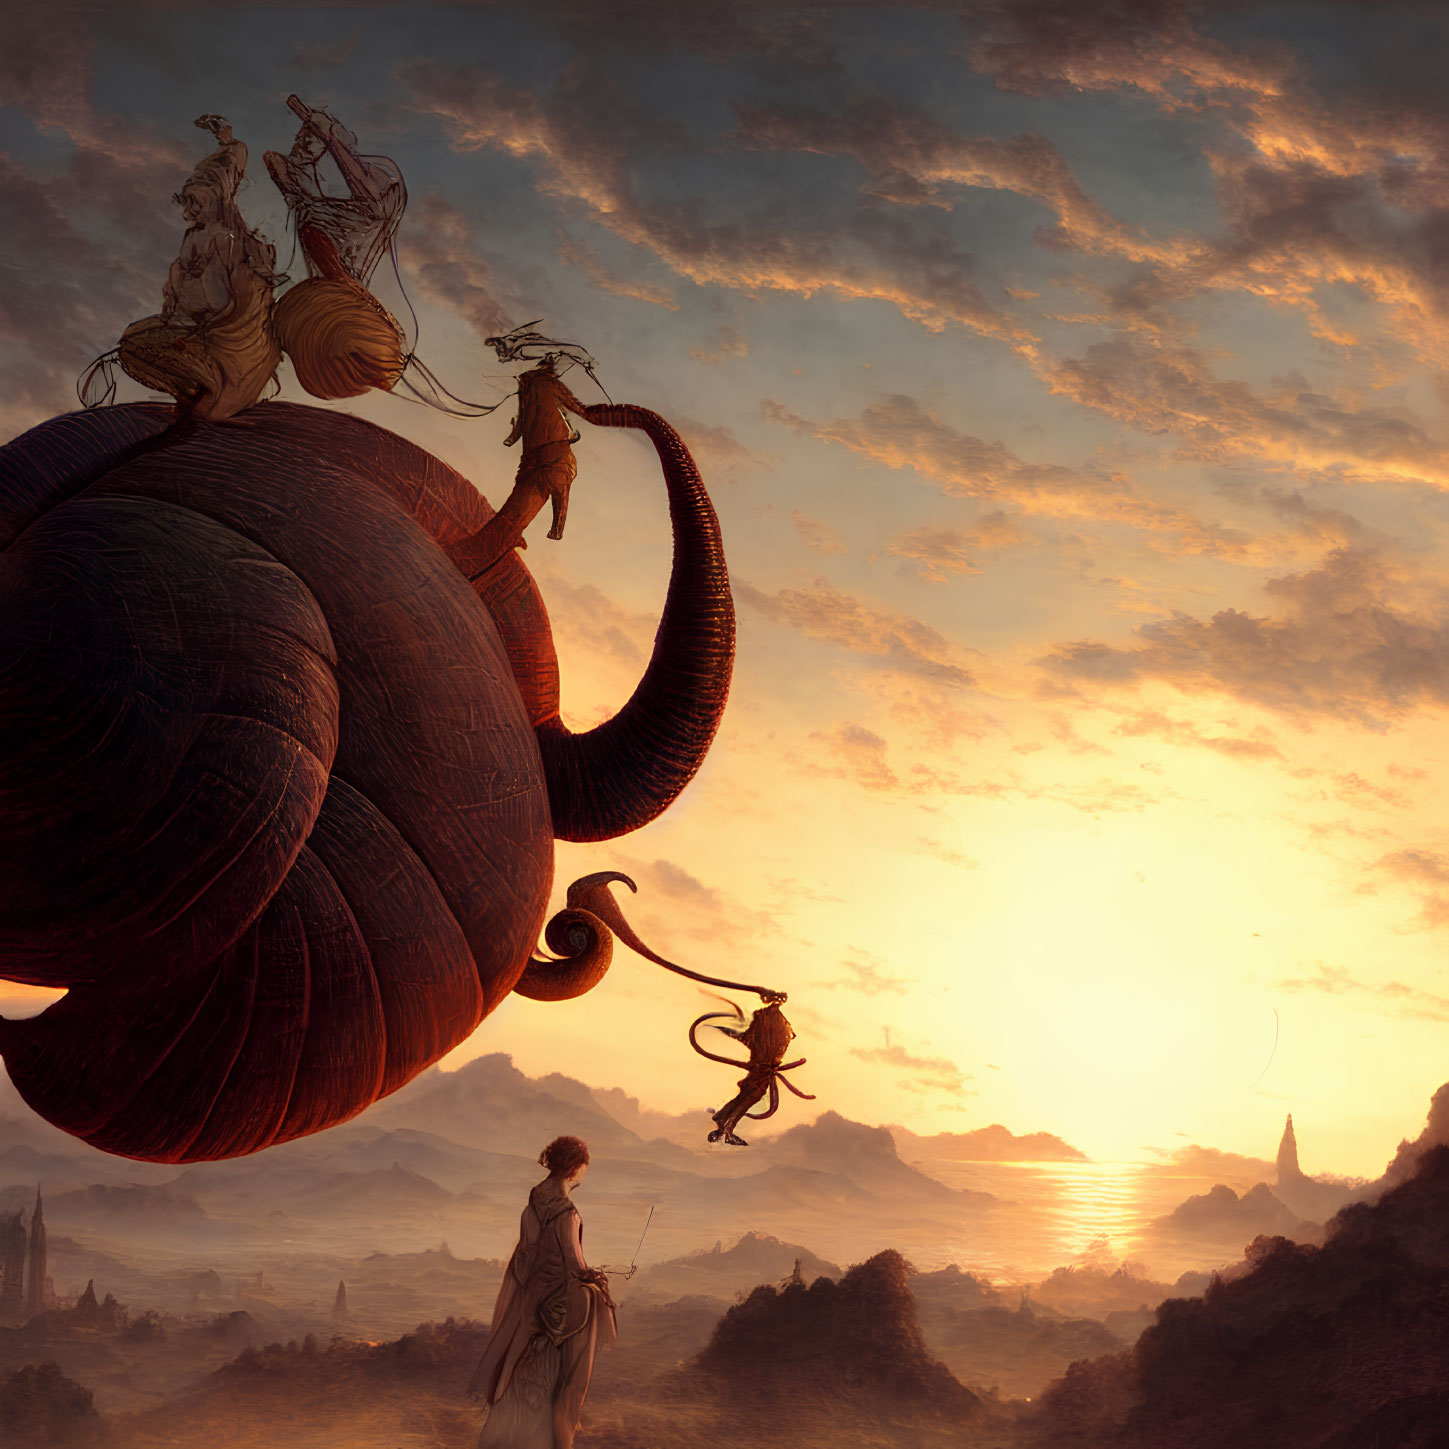 Fantasy scene: people ride elephant-like creature in mountain landscape at sunset